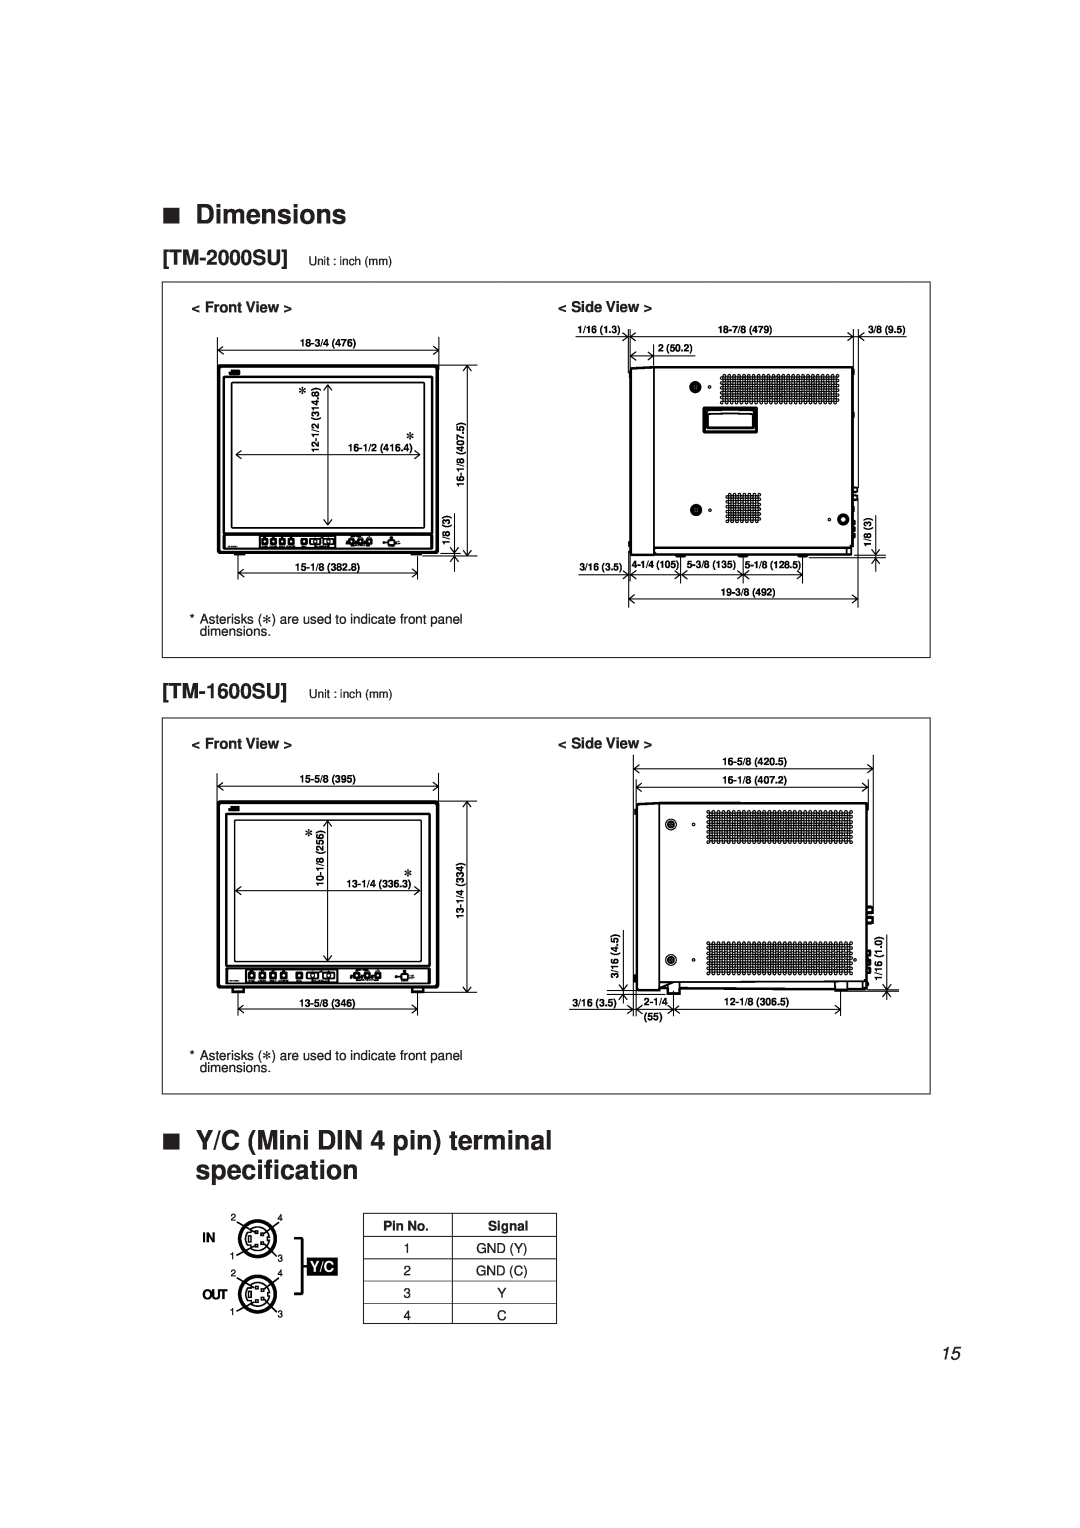 JVC TM-1600SU, TM-2000SU manual Dimensions, 7 Y/C Mini DIN 4 pin terminal specification, Unit inch mm 